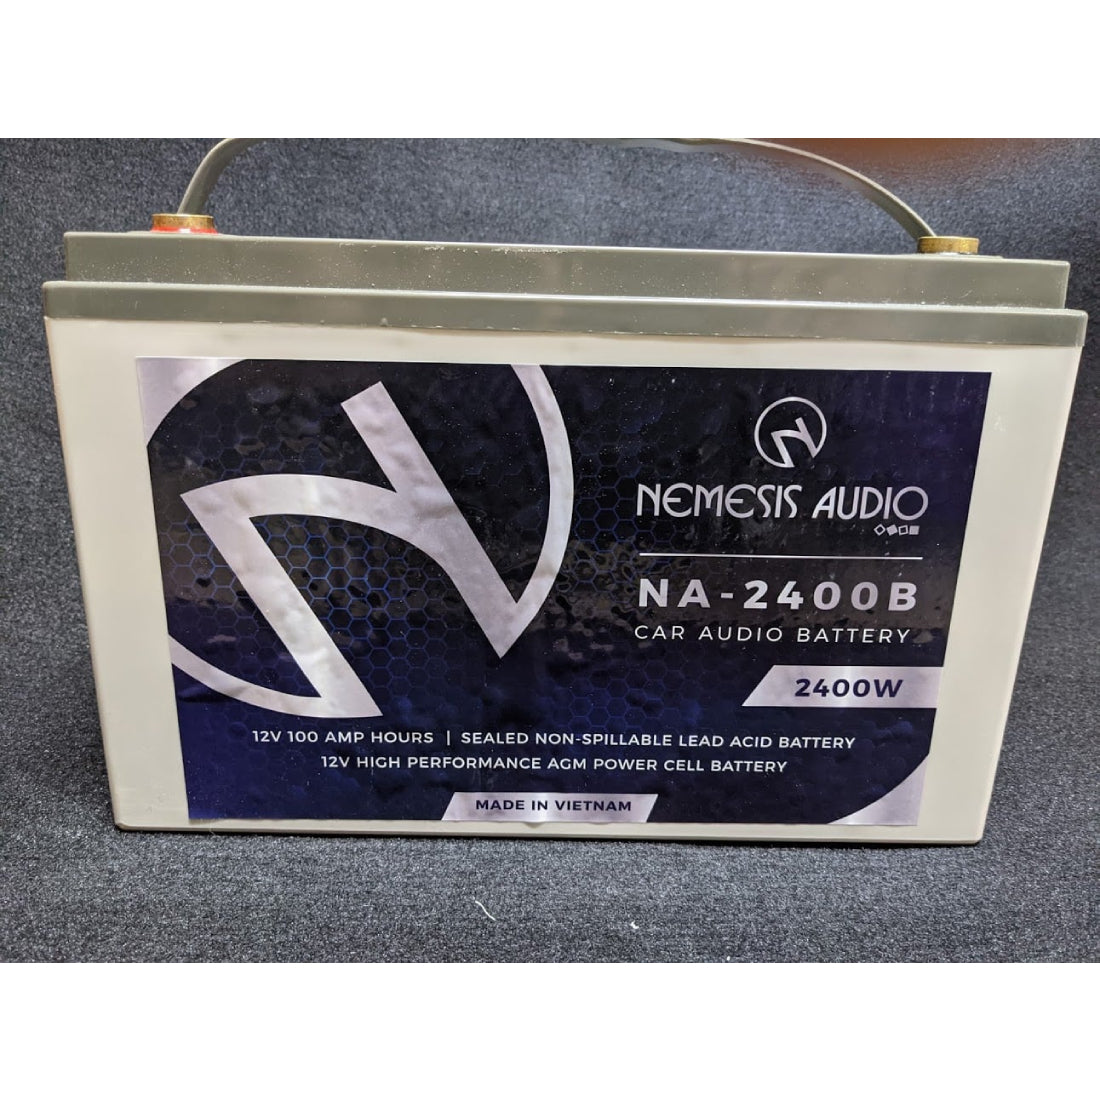 Nemesis NA-2400B 12 Volts High Performance AGM Power Cell Battery